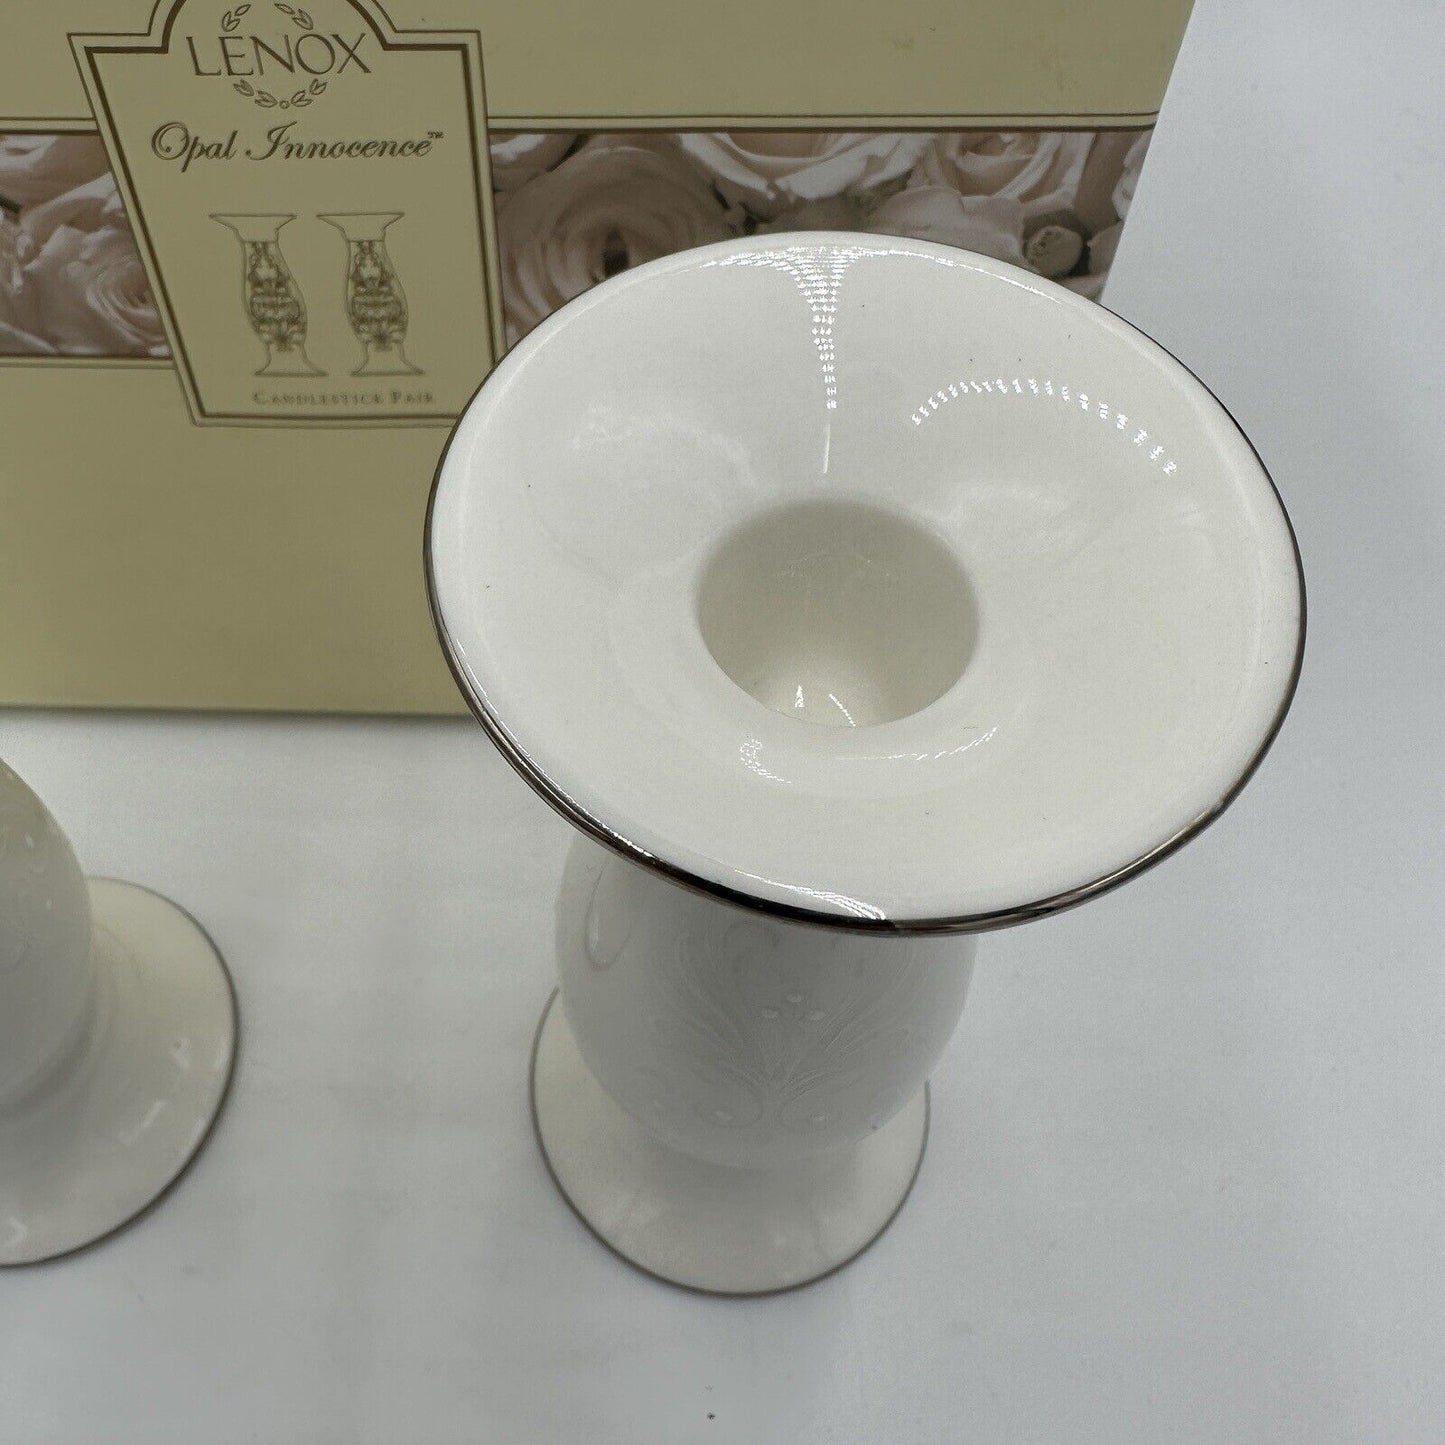 Lenox Porcelain White Opal Innocence Candlesticks Set Table Decor Home Dining